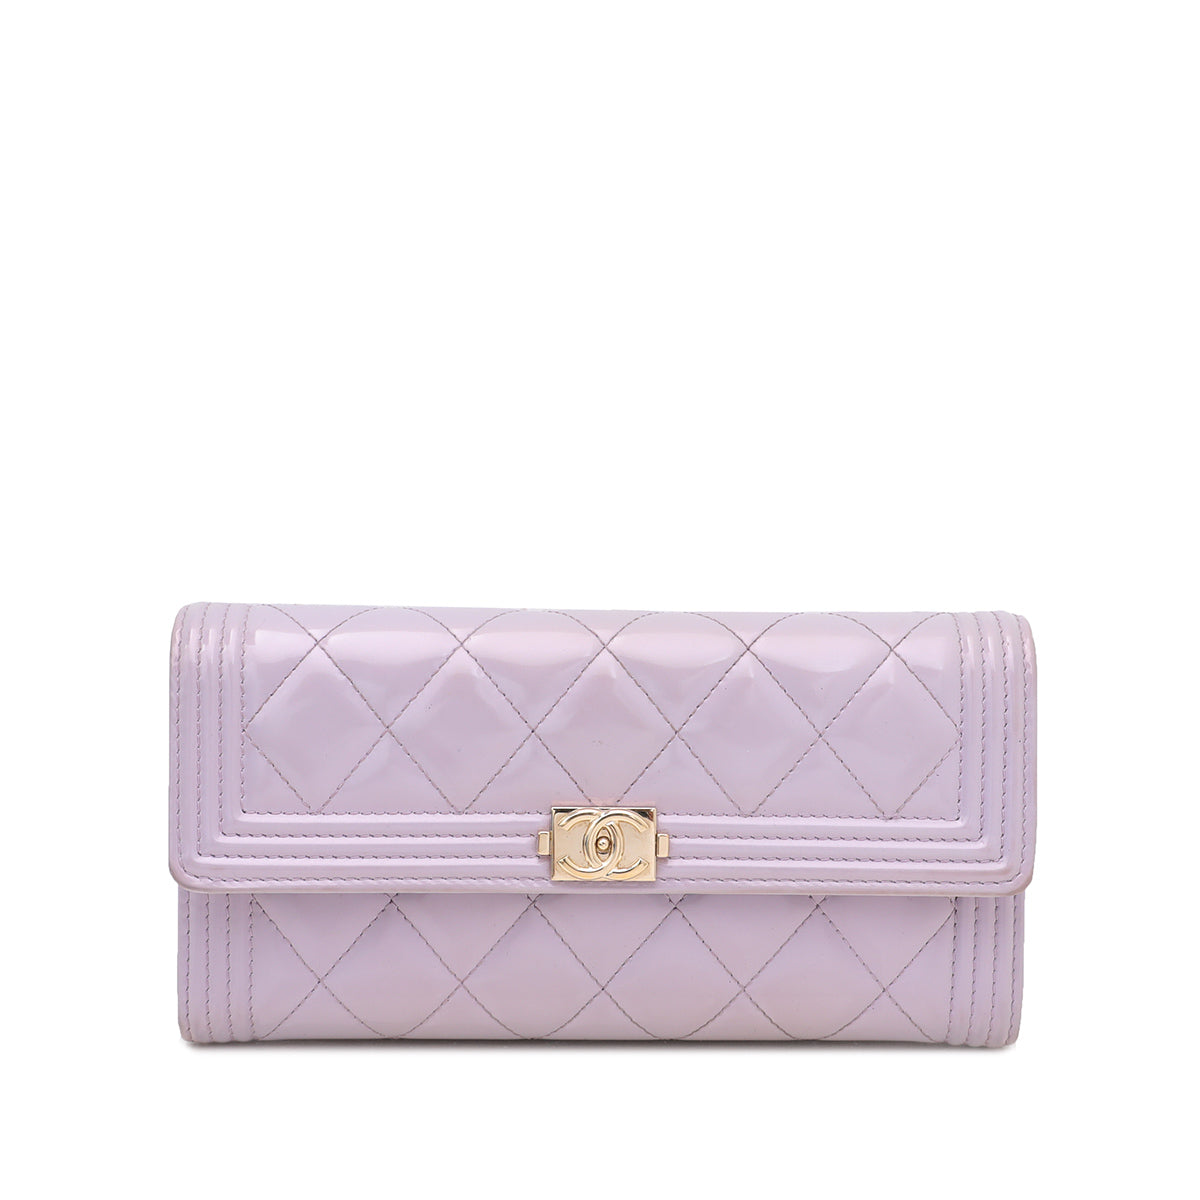 Chanel Lilac Le Boy Flap Wallet